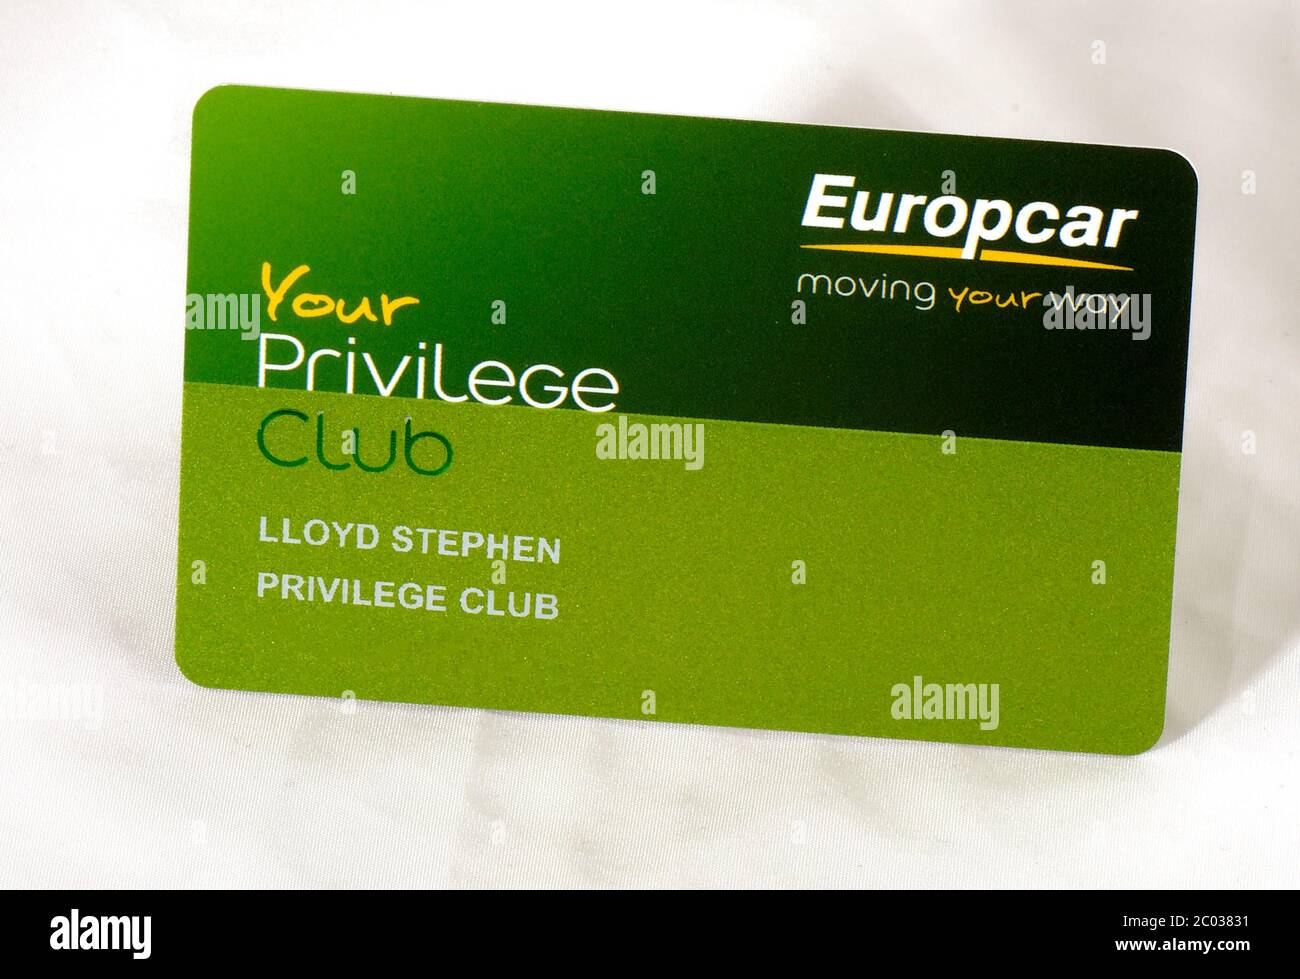 'Your Privilege' Europcar car rental loyalty club card Stock Photo